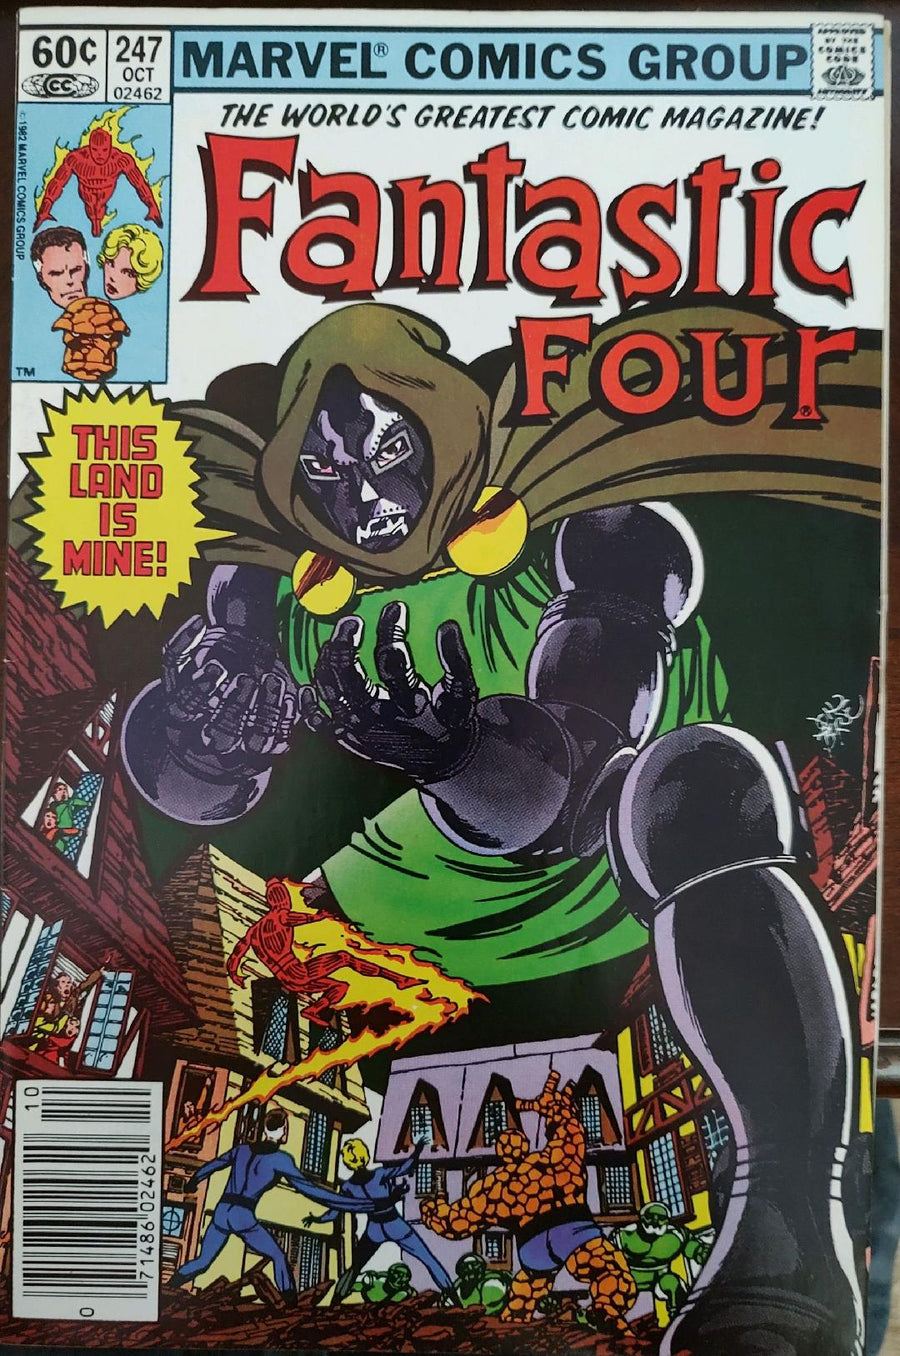 Fantastic Four #247 Comic Book Cover